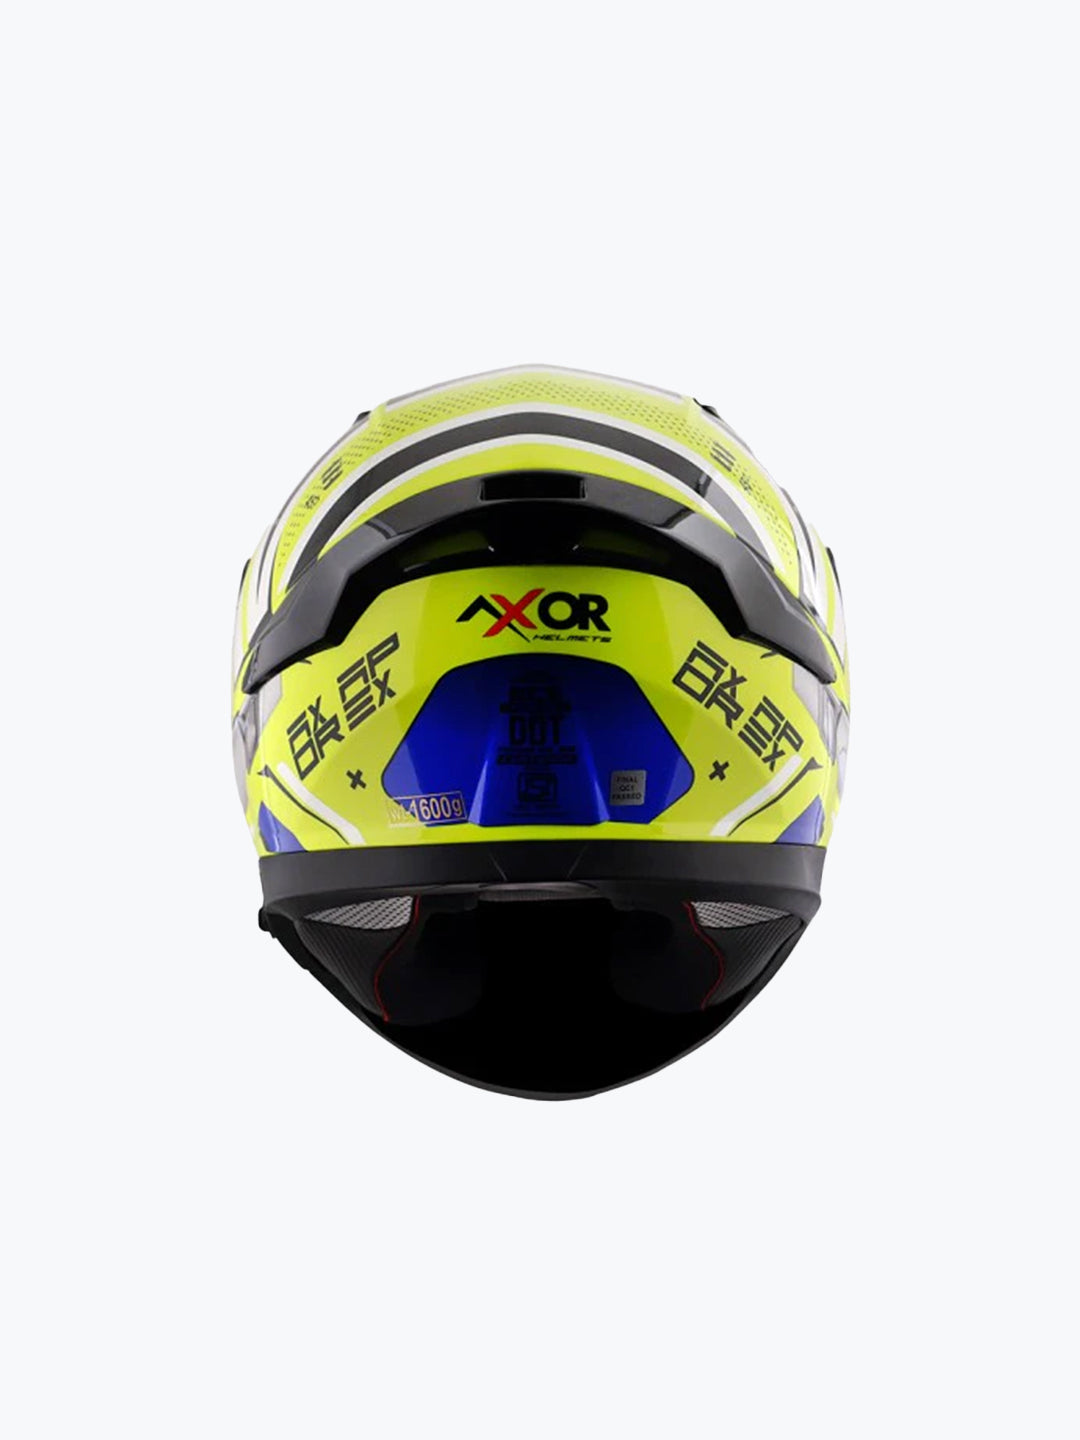 Axor Apex Hex-2 Neon Yellow Blue